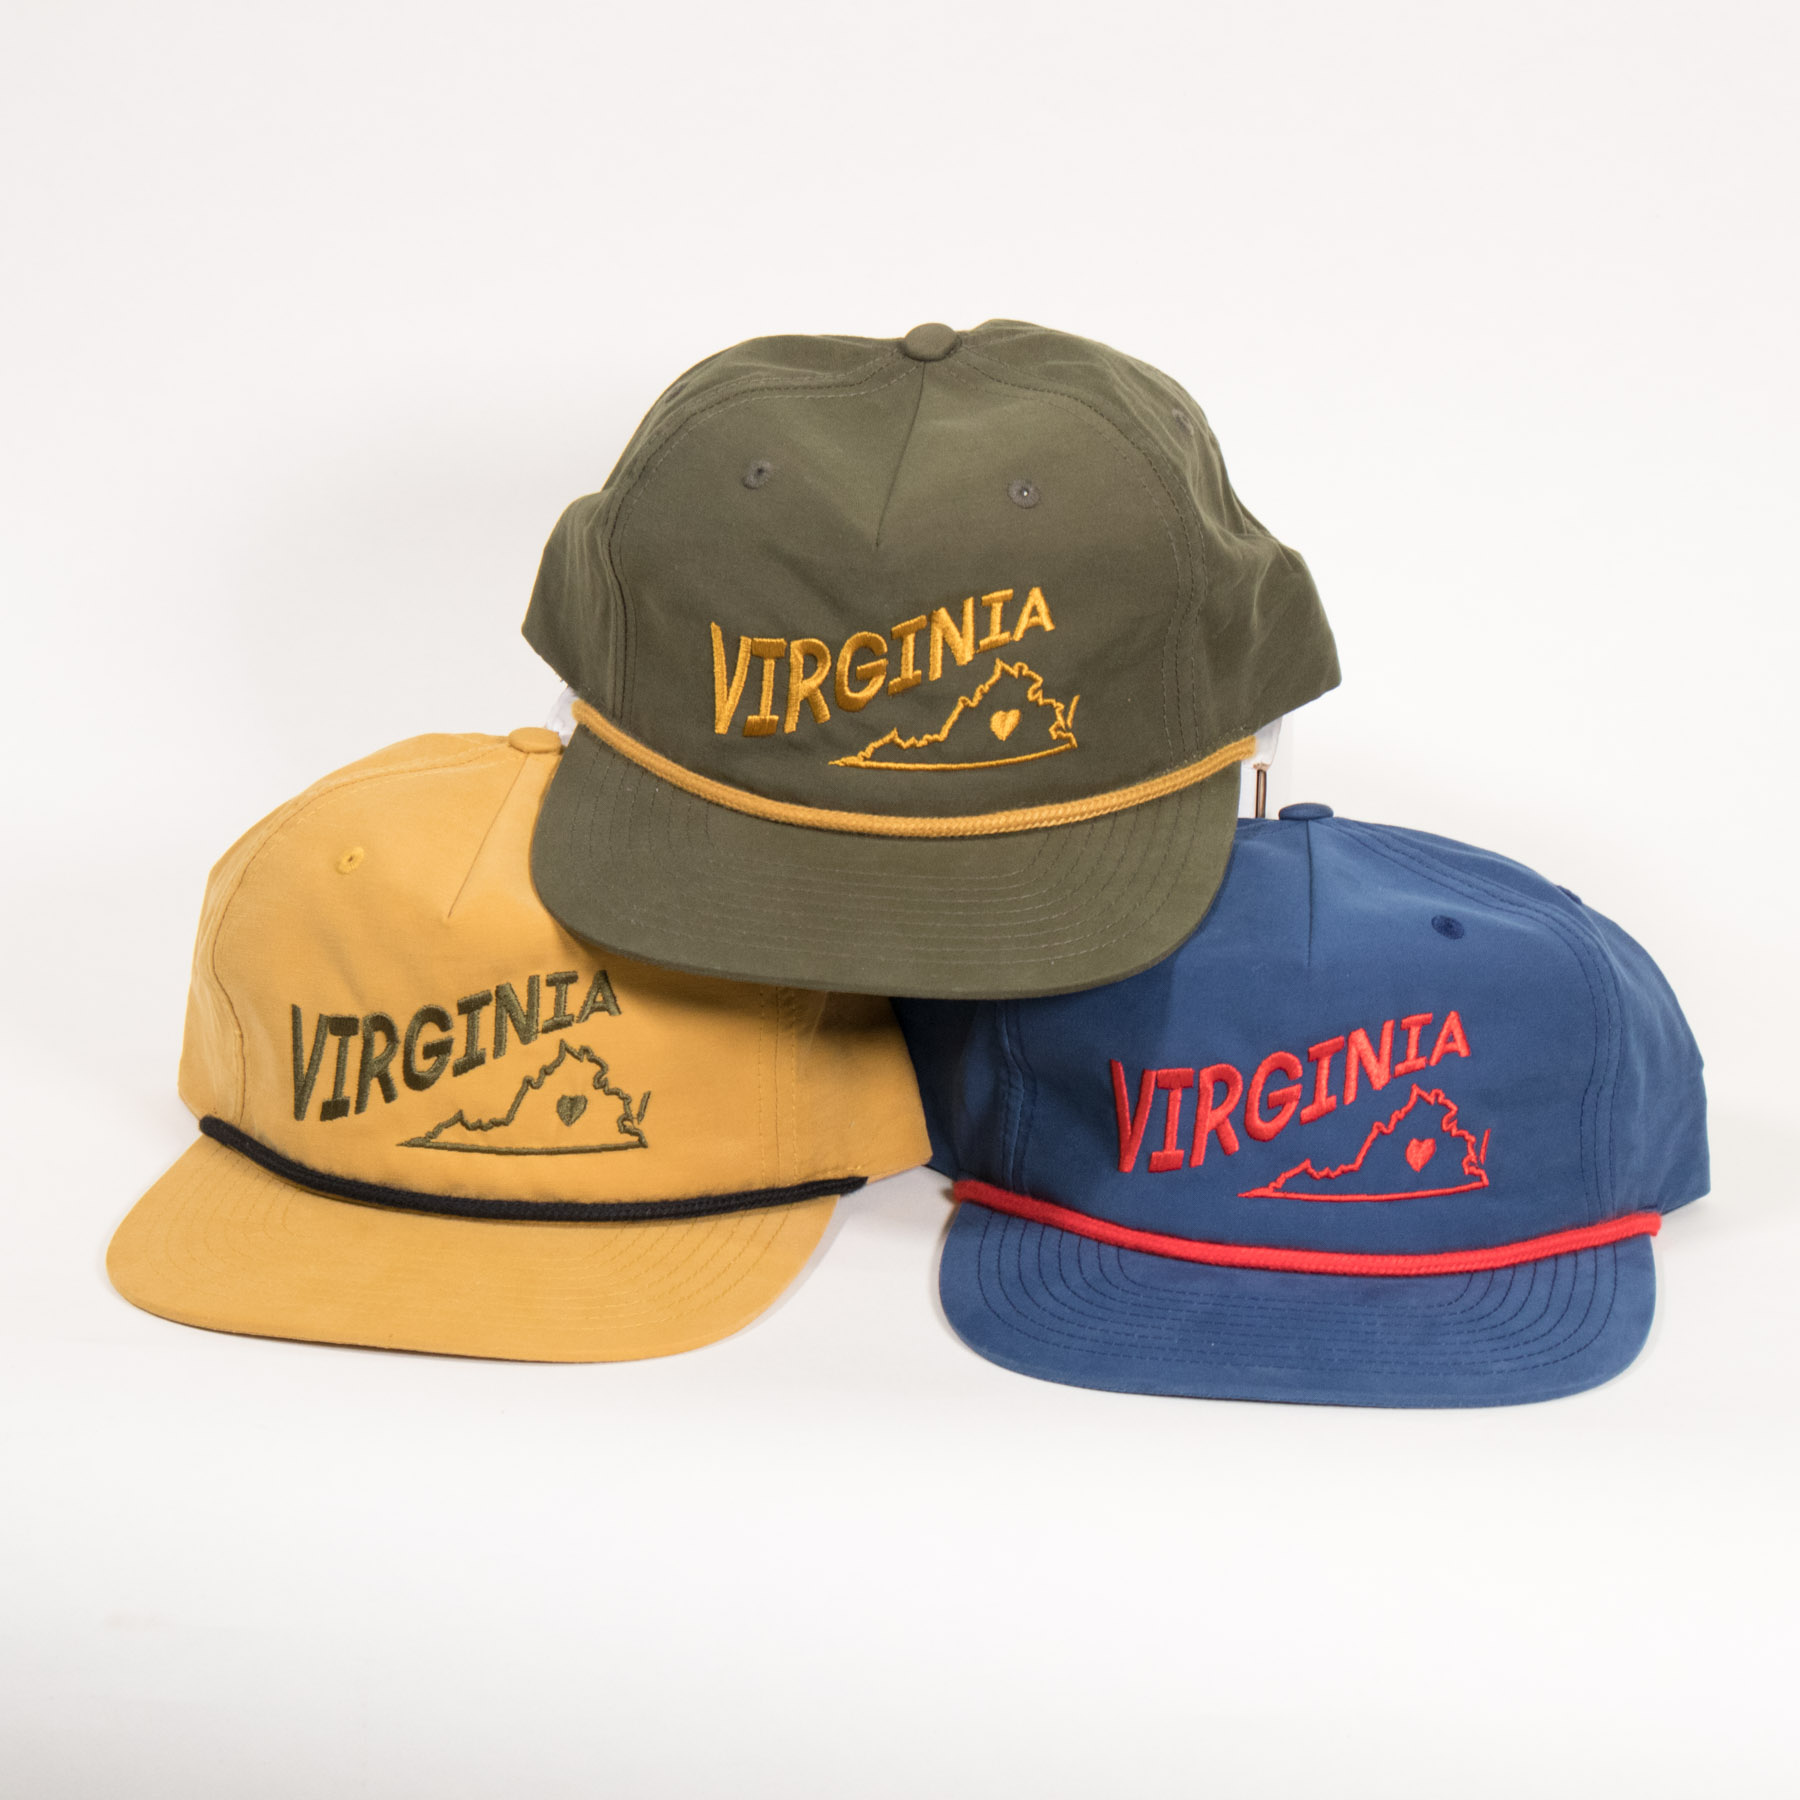 Virginia grandpa hat - Crewel and Unusual